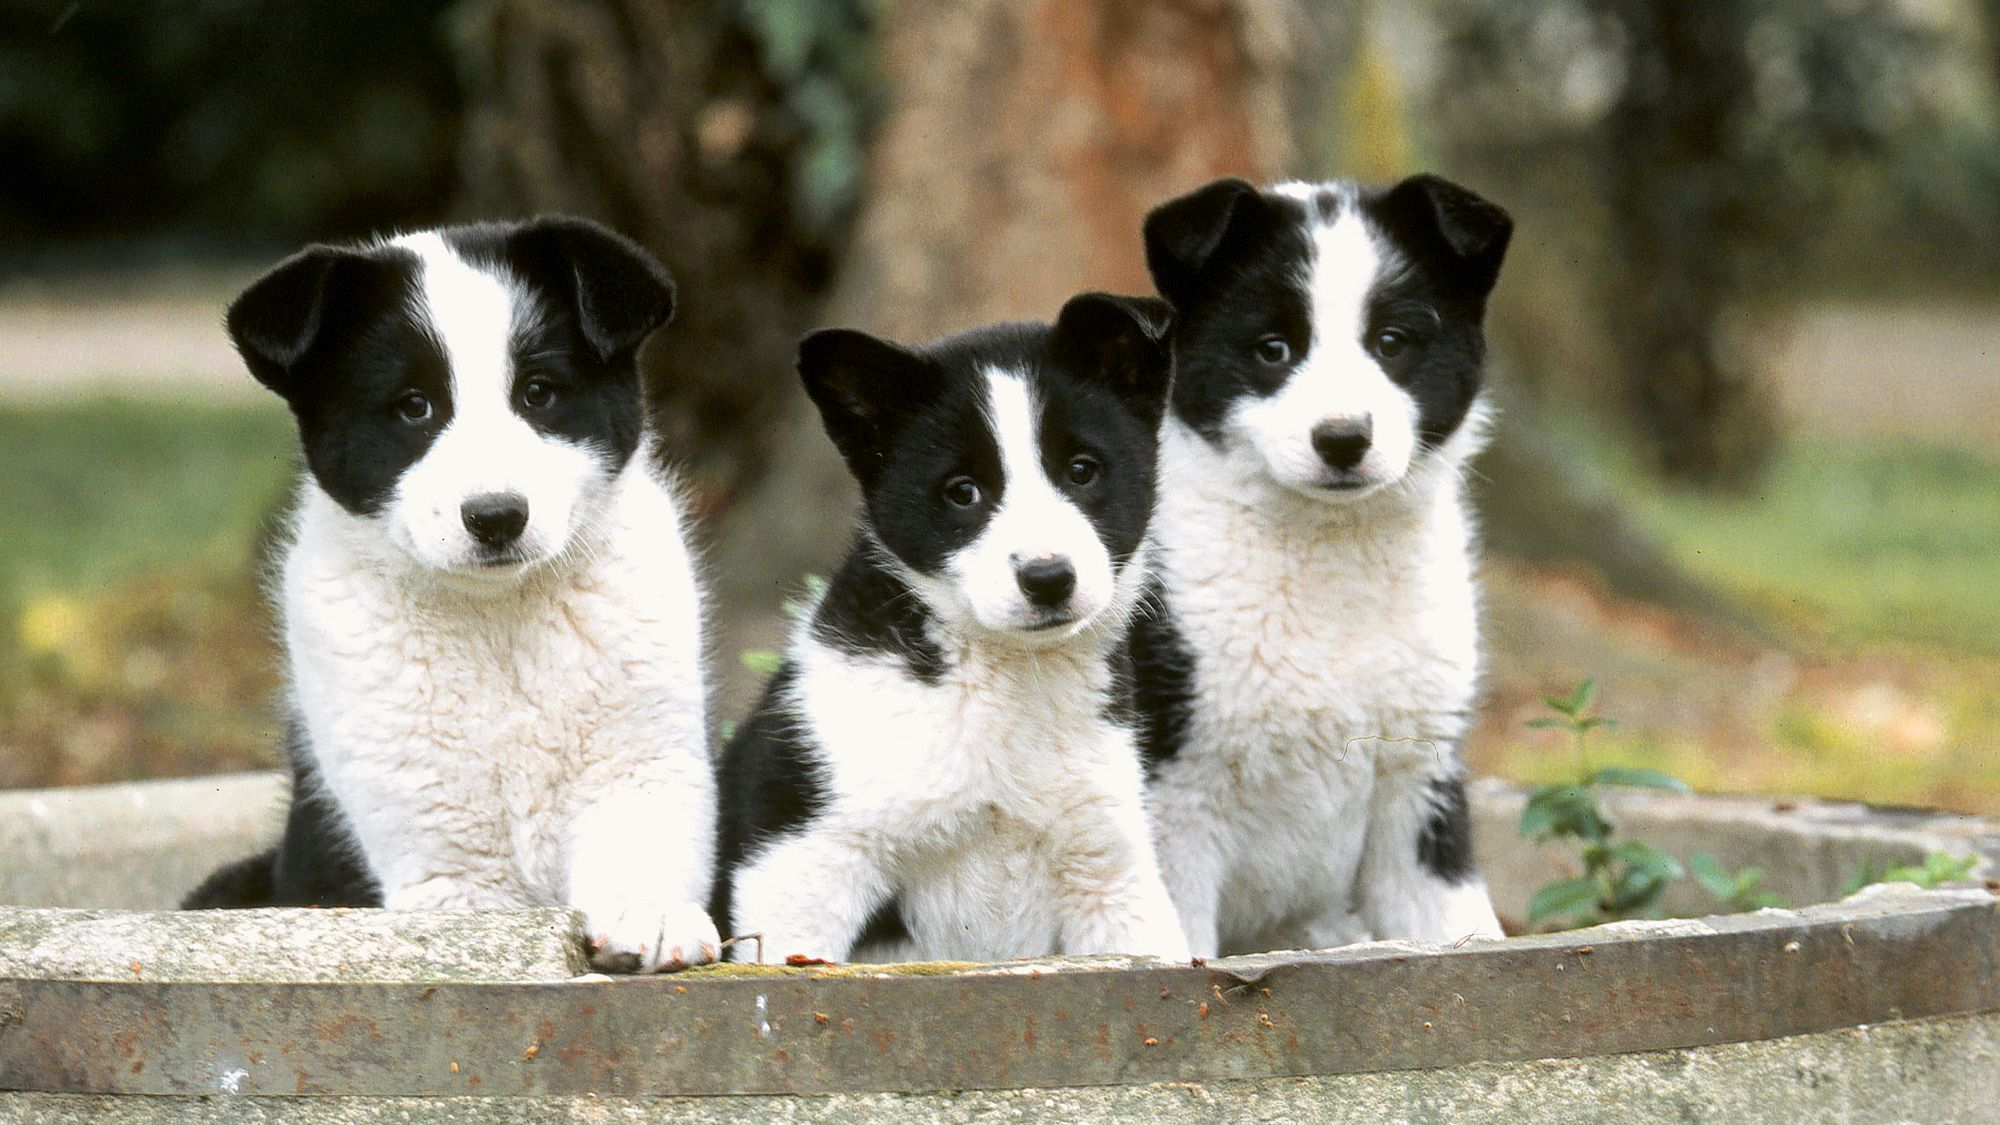 Three Karelian Bear Dog puppies sitting in stone urn